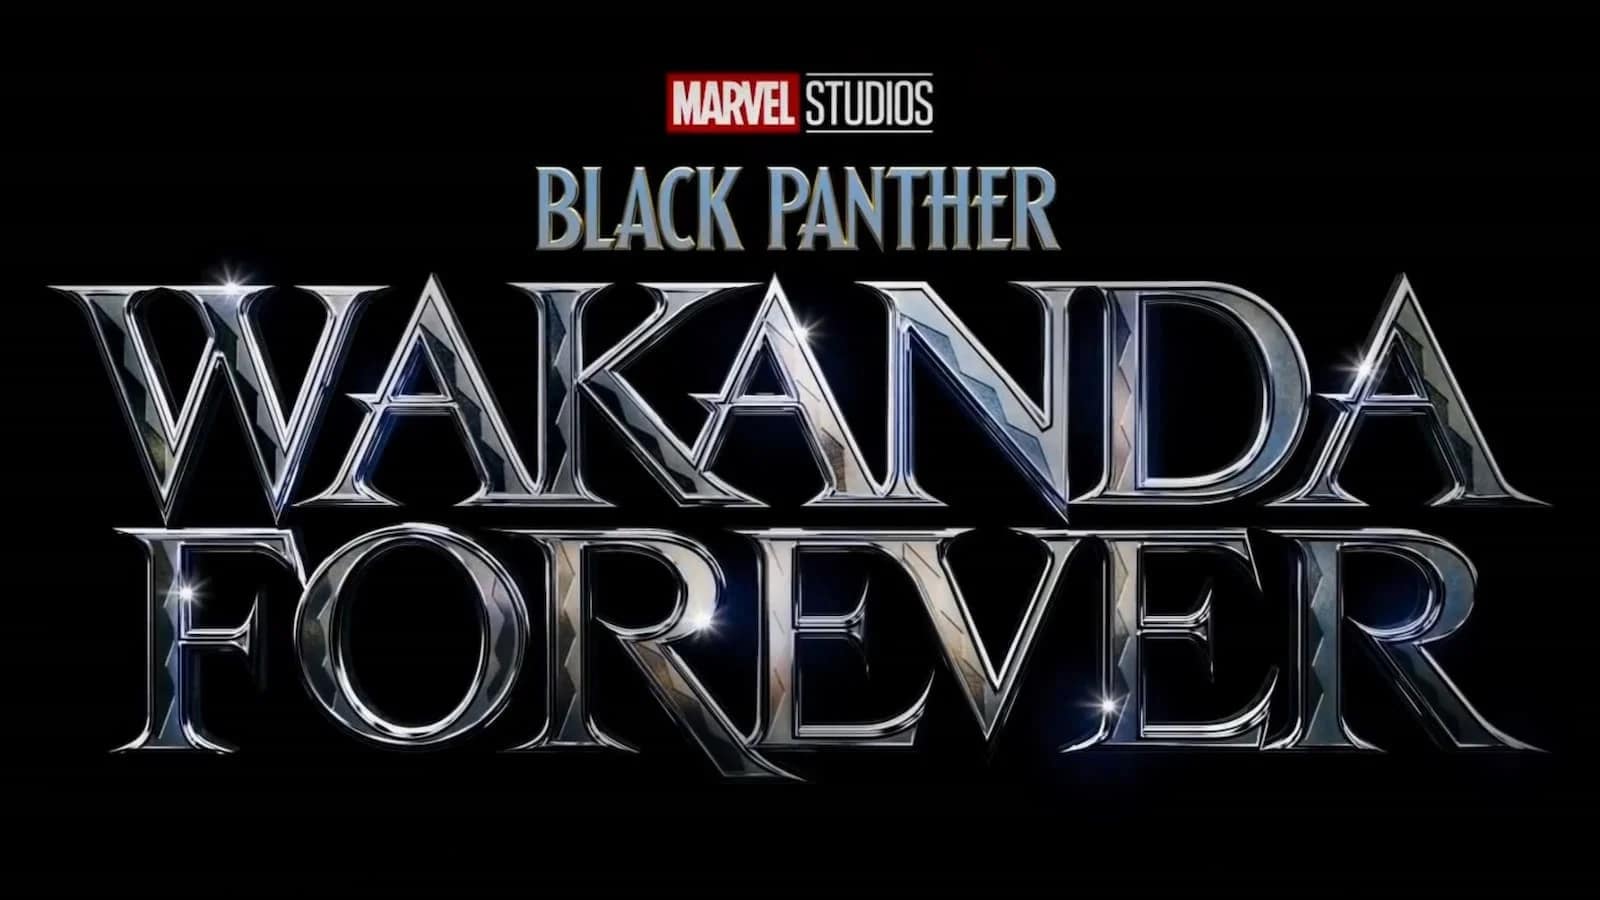 Black panther Wakanda forever header